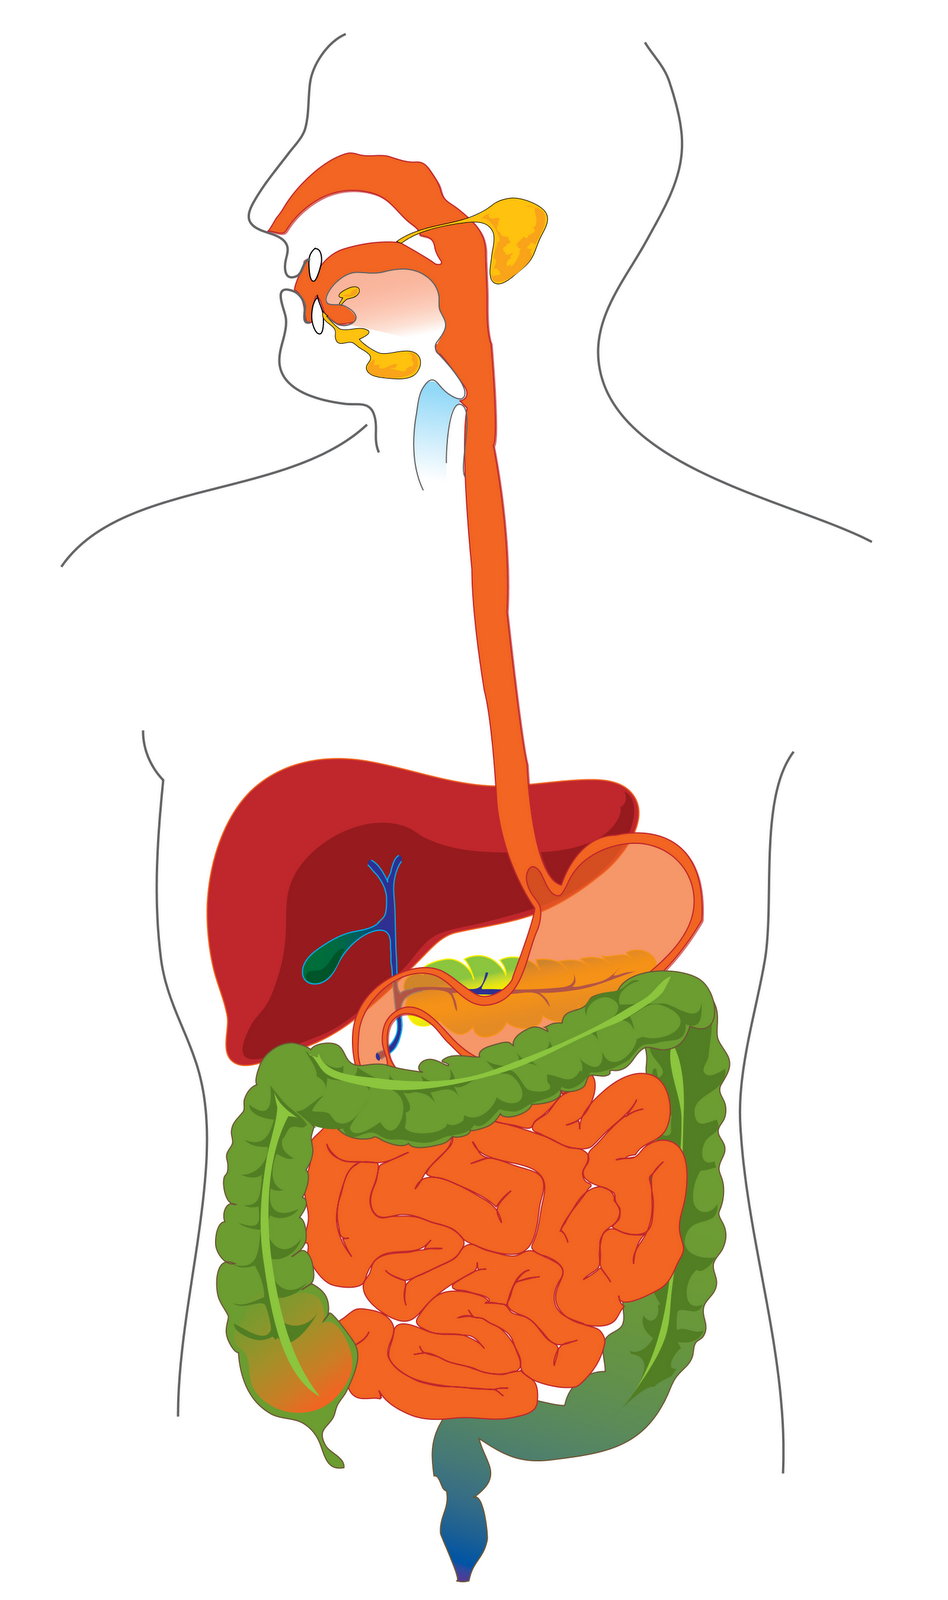 BI207 Human A & P II: Digestive System and Metabolism